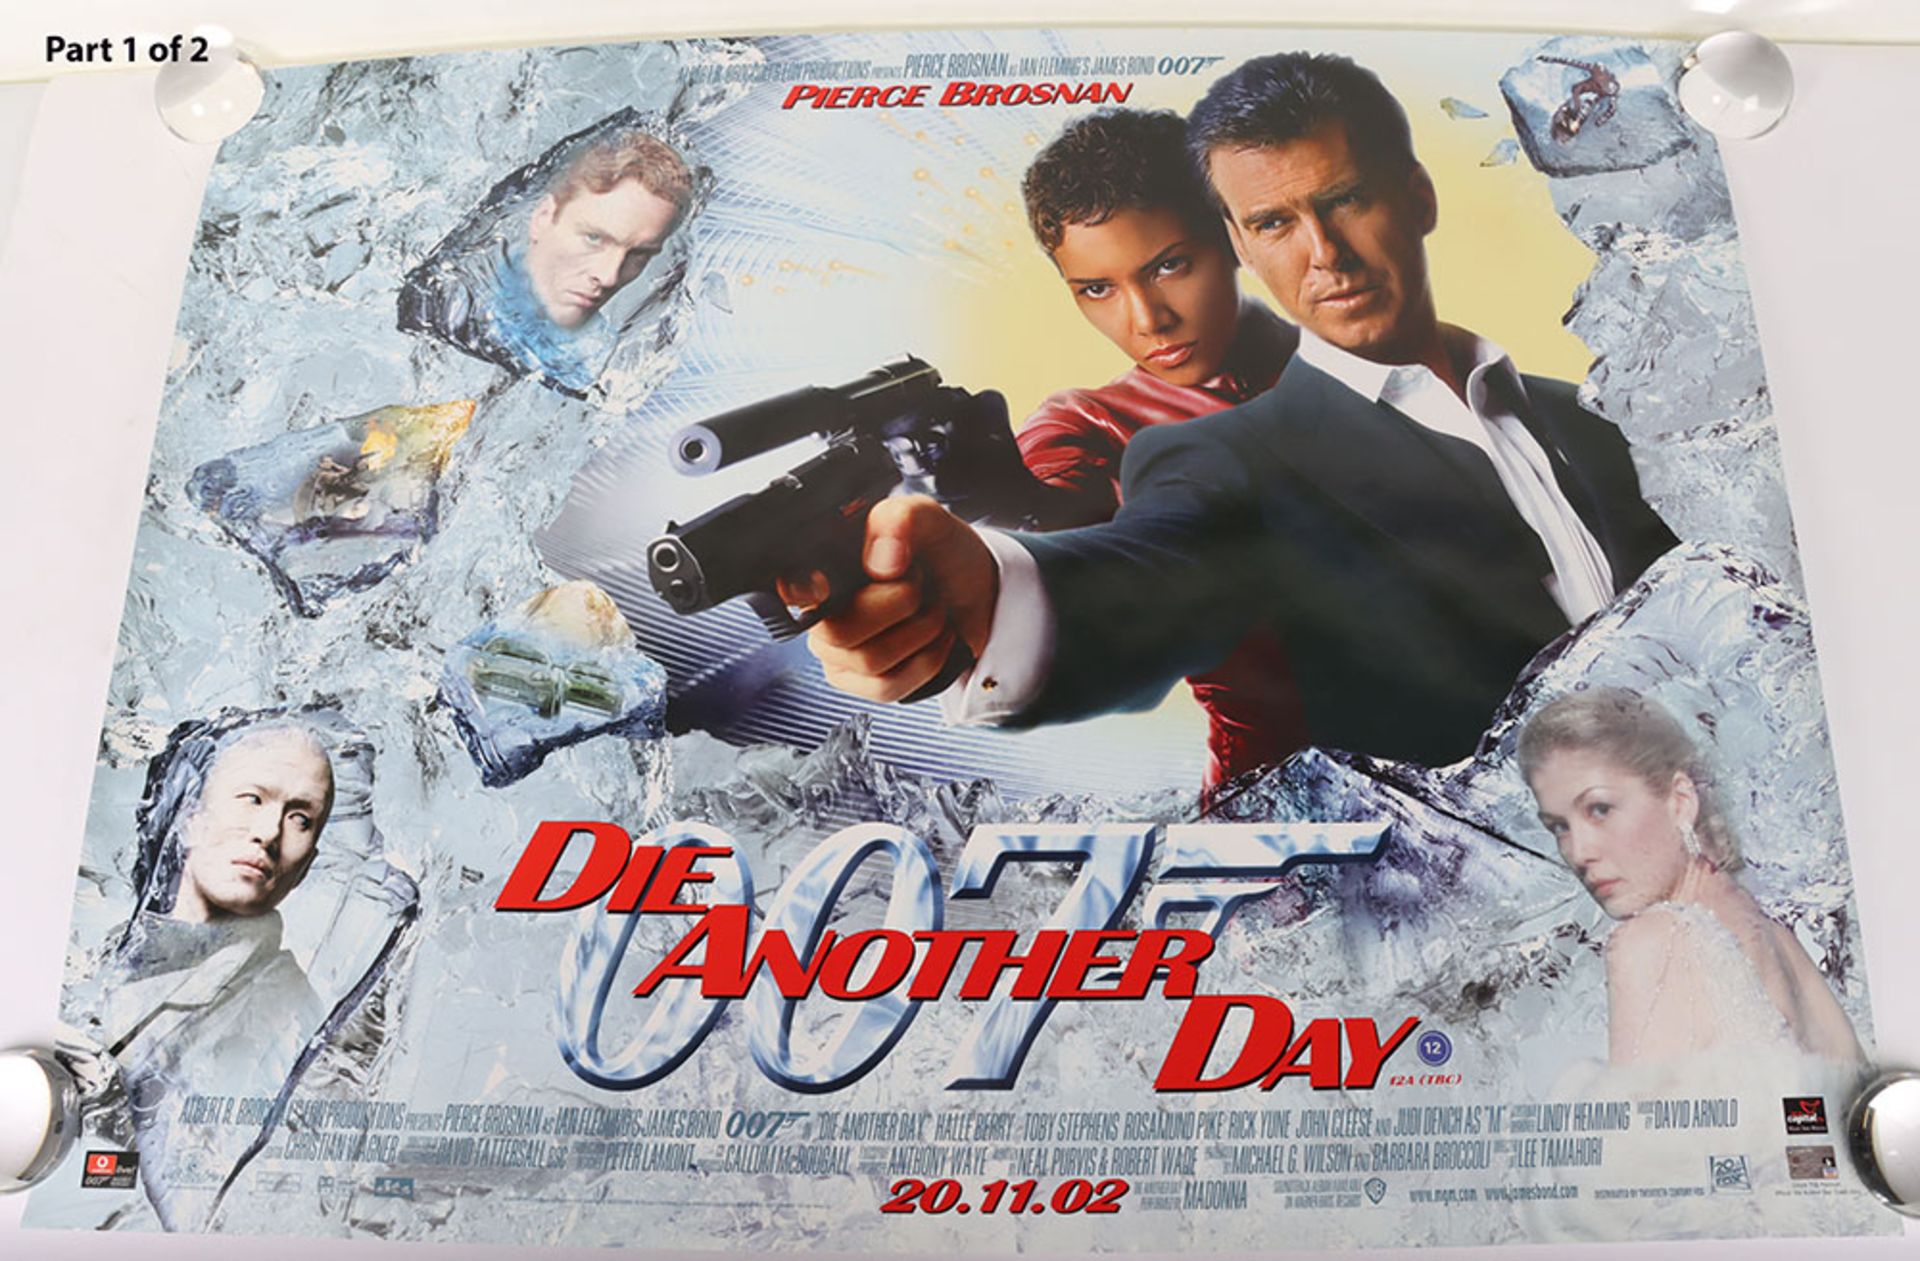 James Bond Die Another Day British Quad film poster